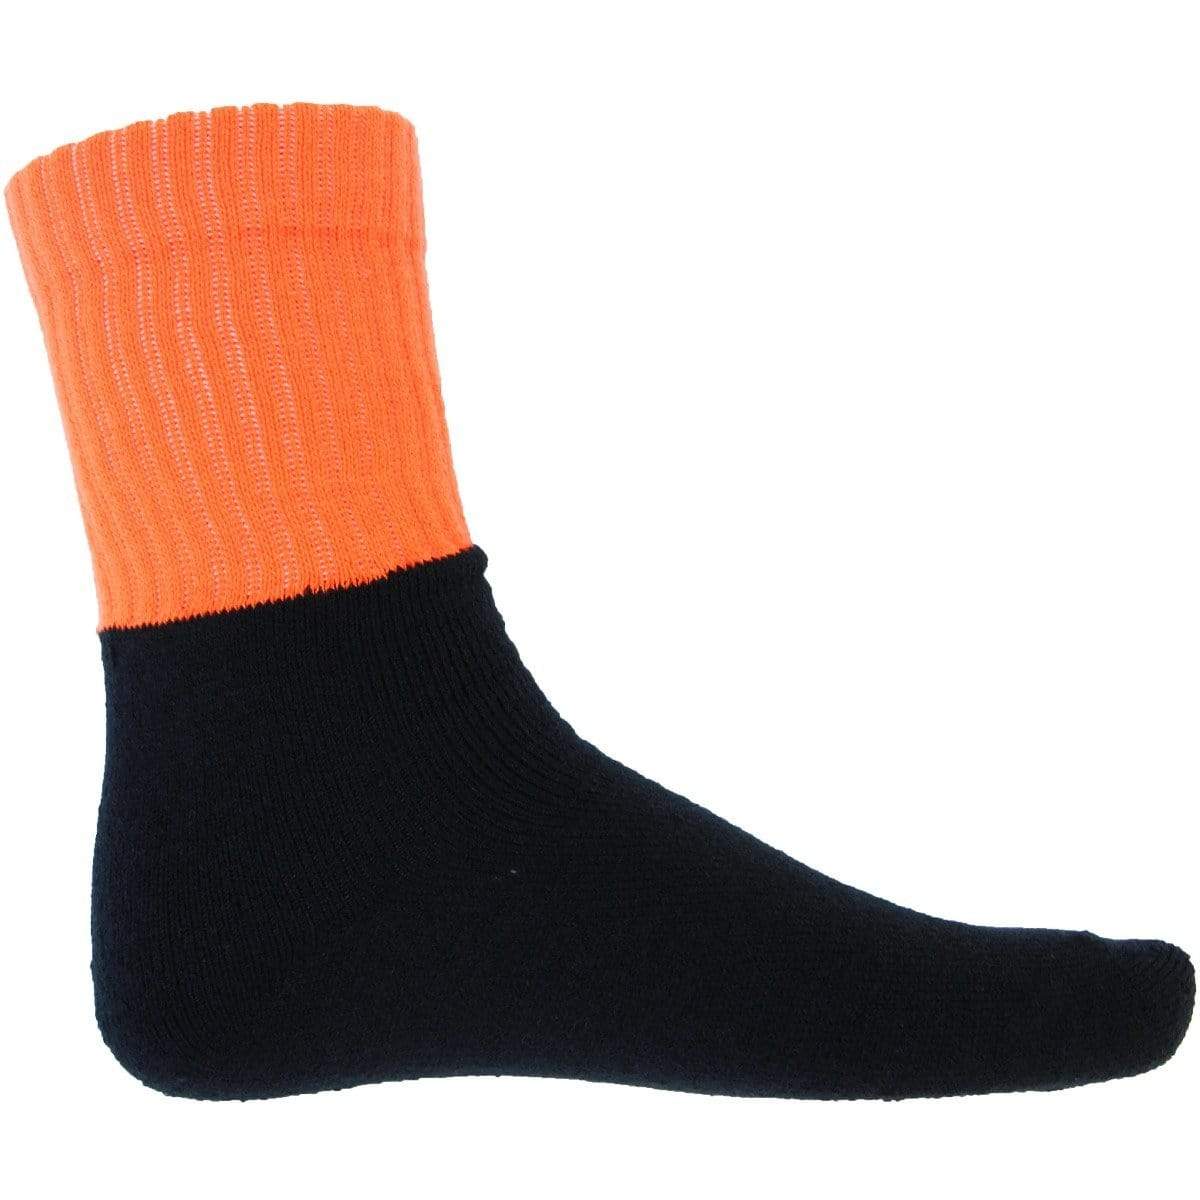 DNC Workwear Work Wear Orange/Black / 2-5 DNC WORKWEAR Hi-Vis Two-Tone Acrylic 3 Pack Work Socks S123